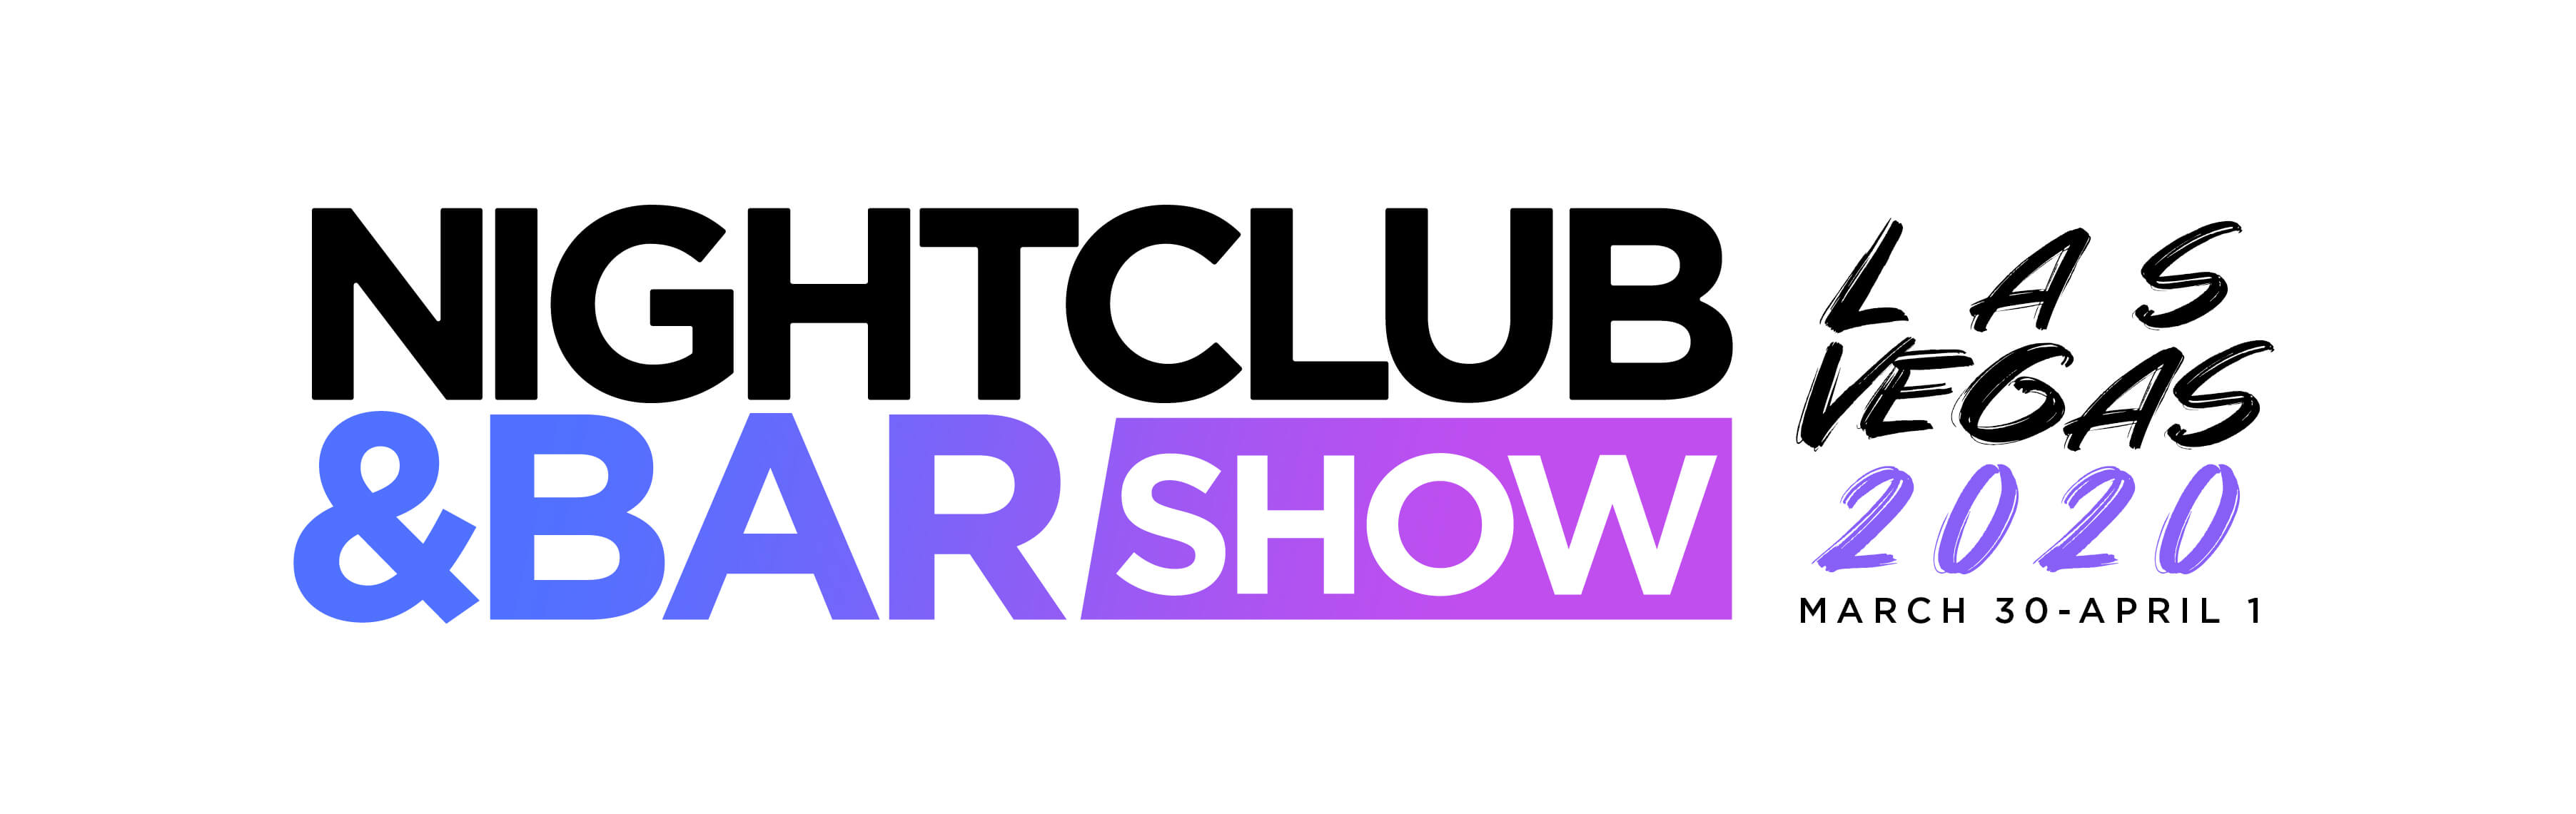 2020 Nightclub  Bar Show Las Vegas logo with dates stacked